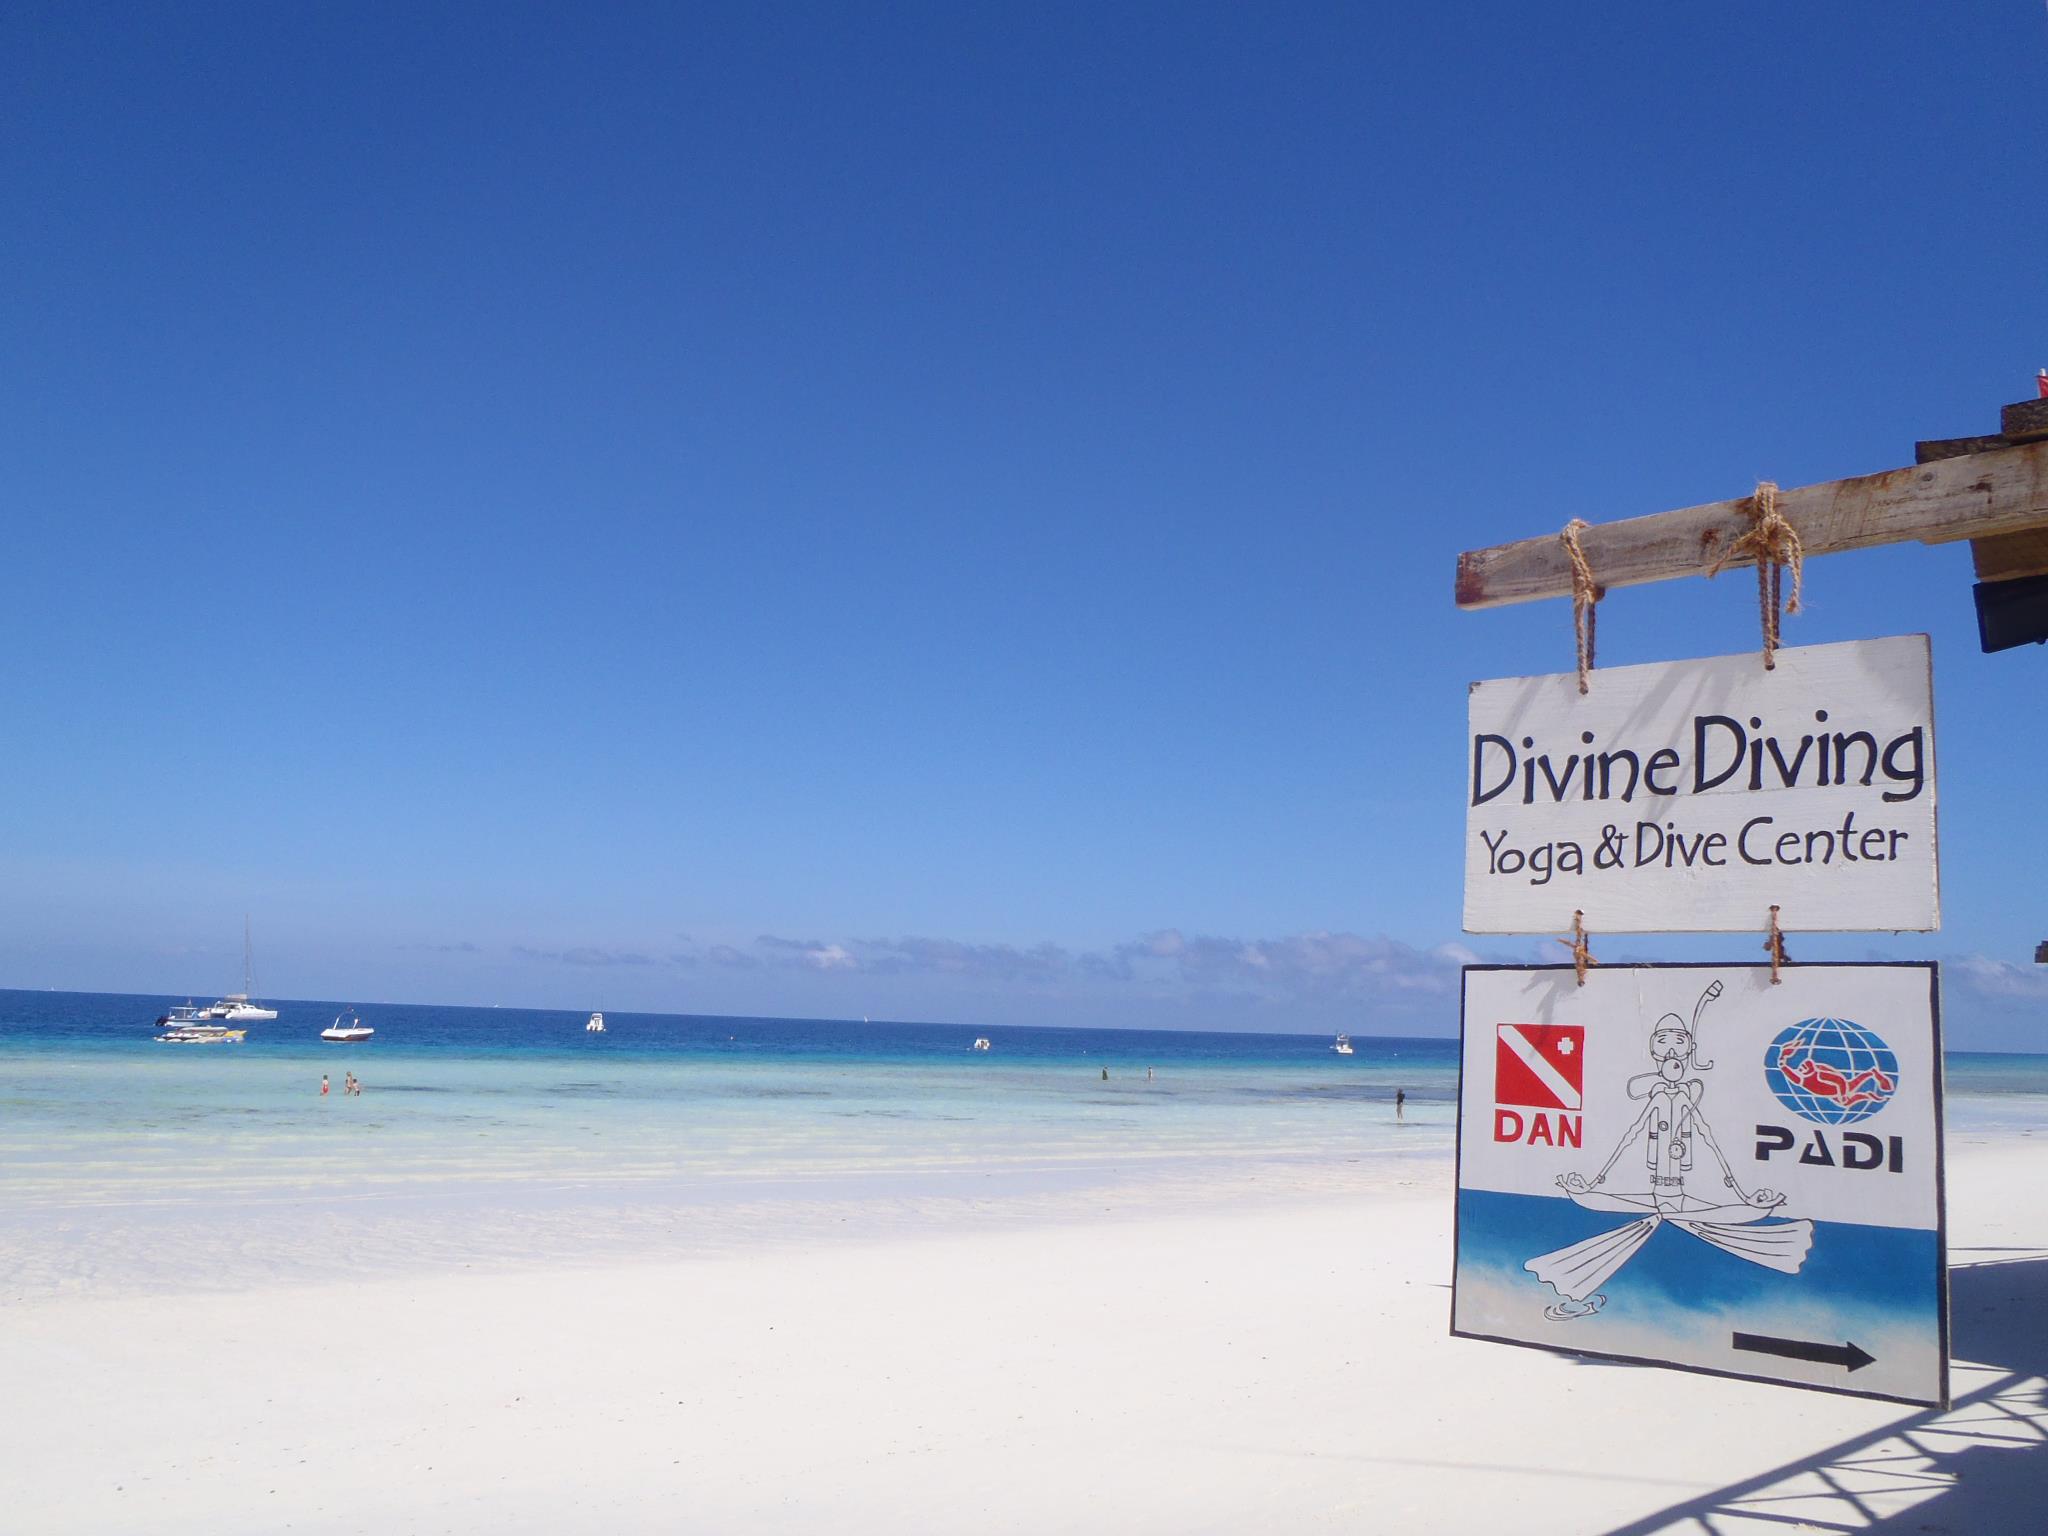 Divine Diving Yoga & Dive Center